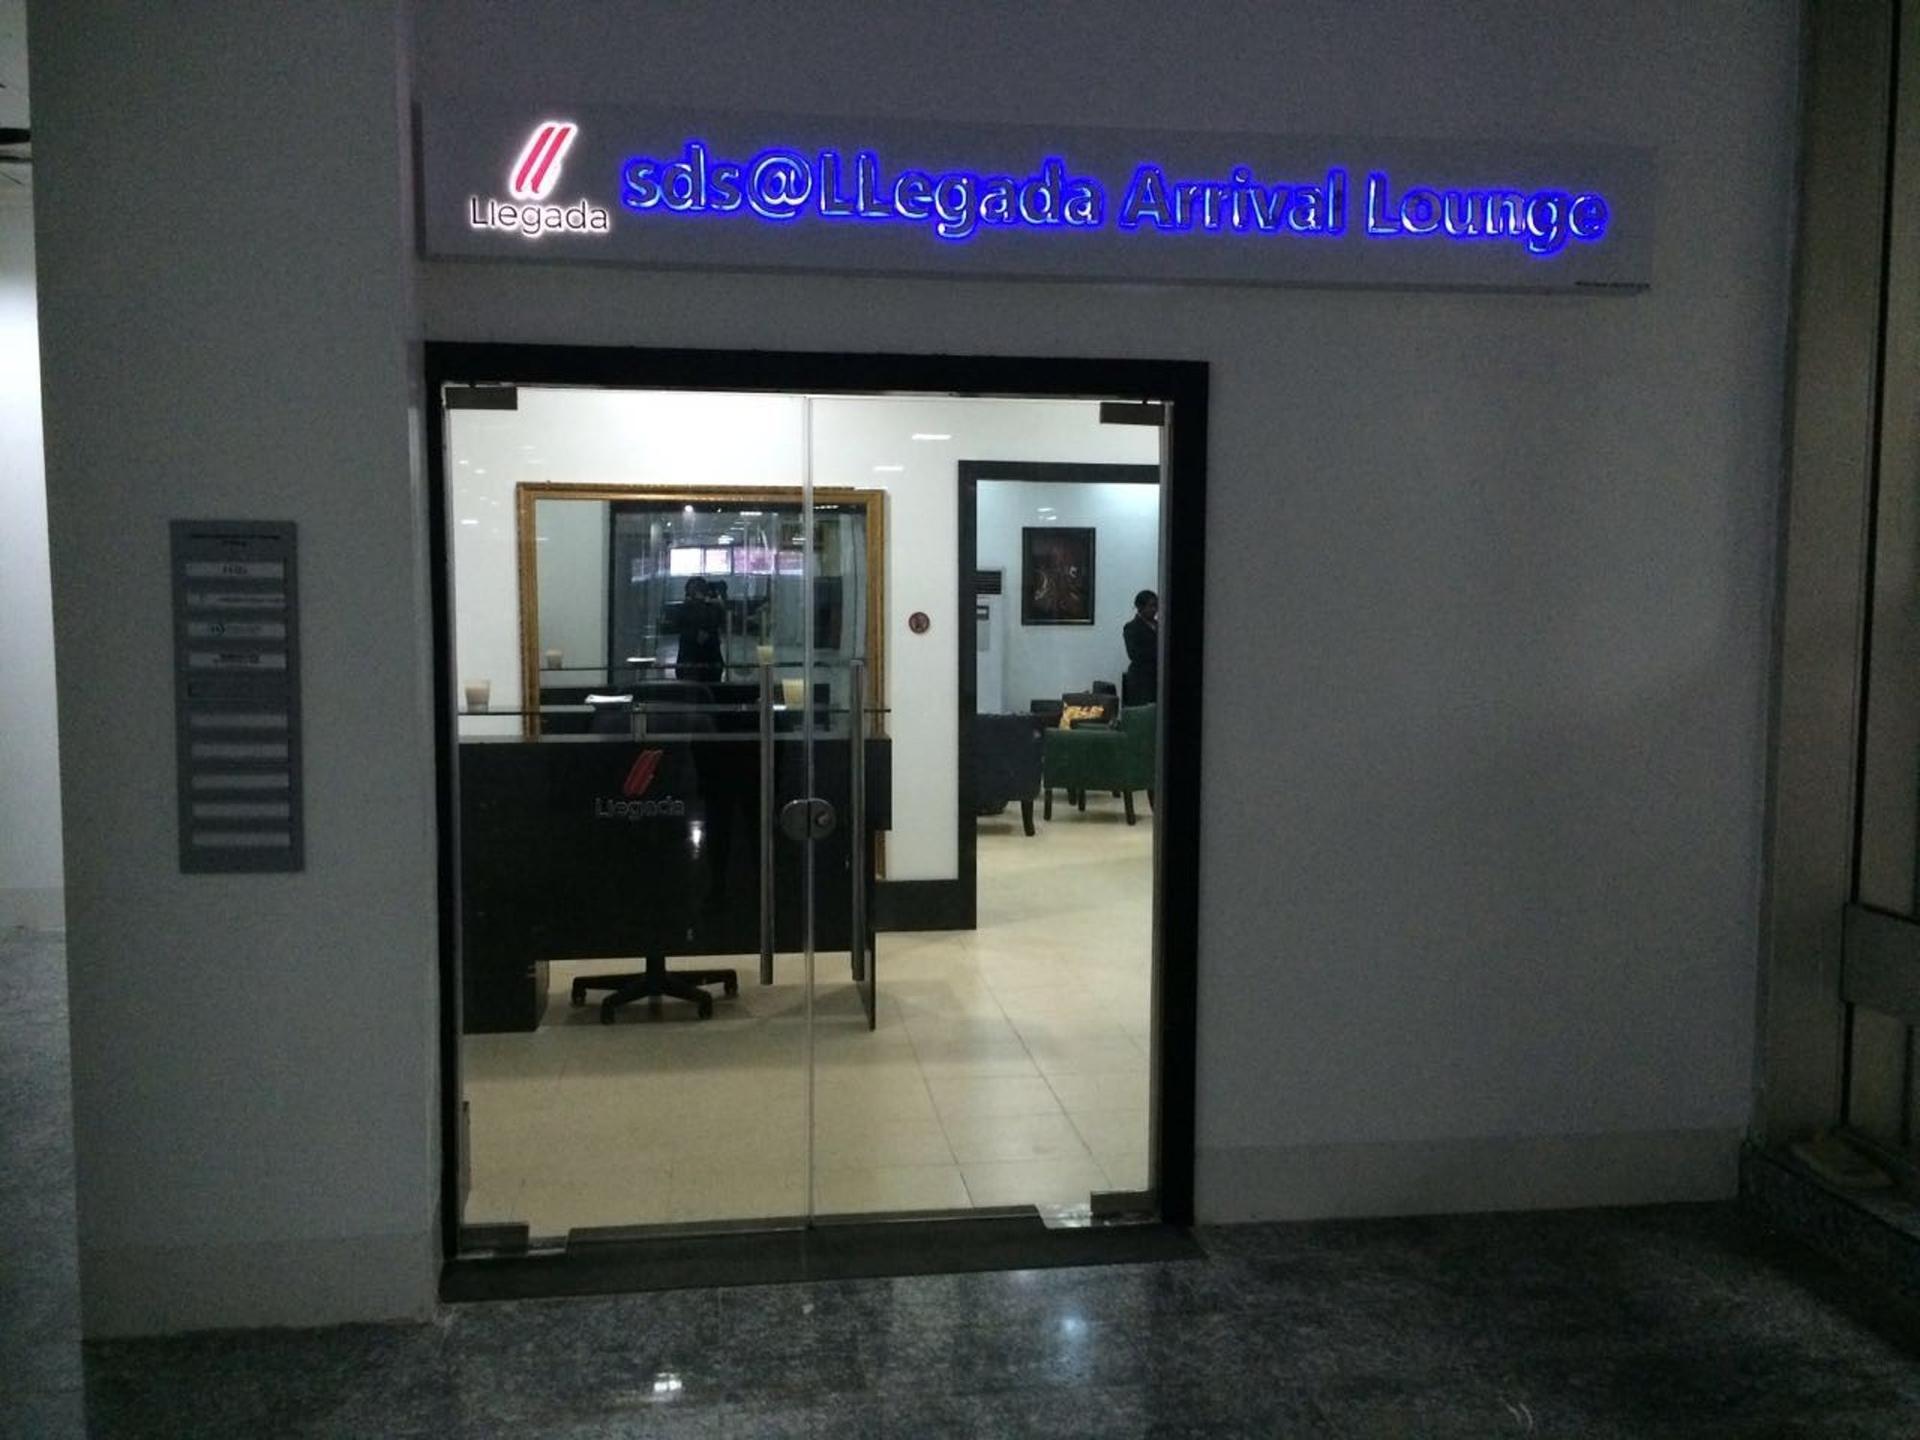 SDS Llegada Arrival Lounge (D-Wing) image 8 of 8